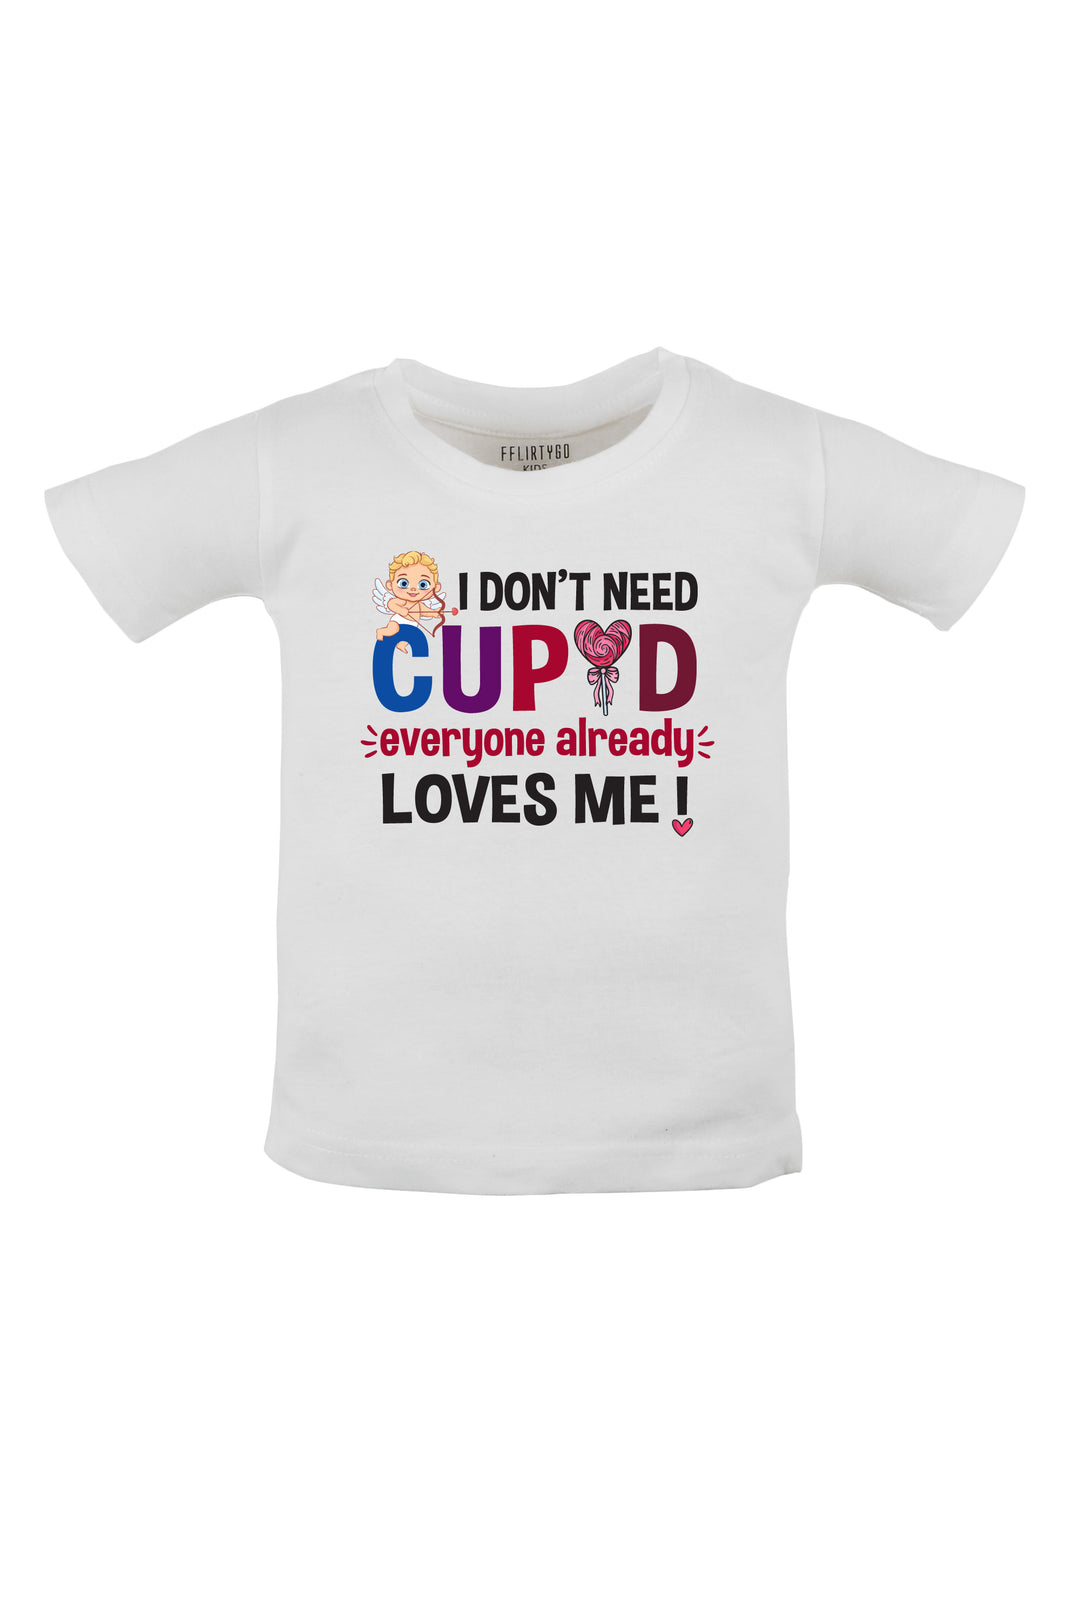 I Don't Need Cupid Everyone Already Loves Me Kids T Shirt